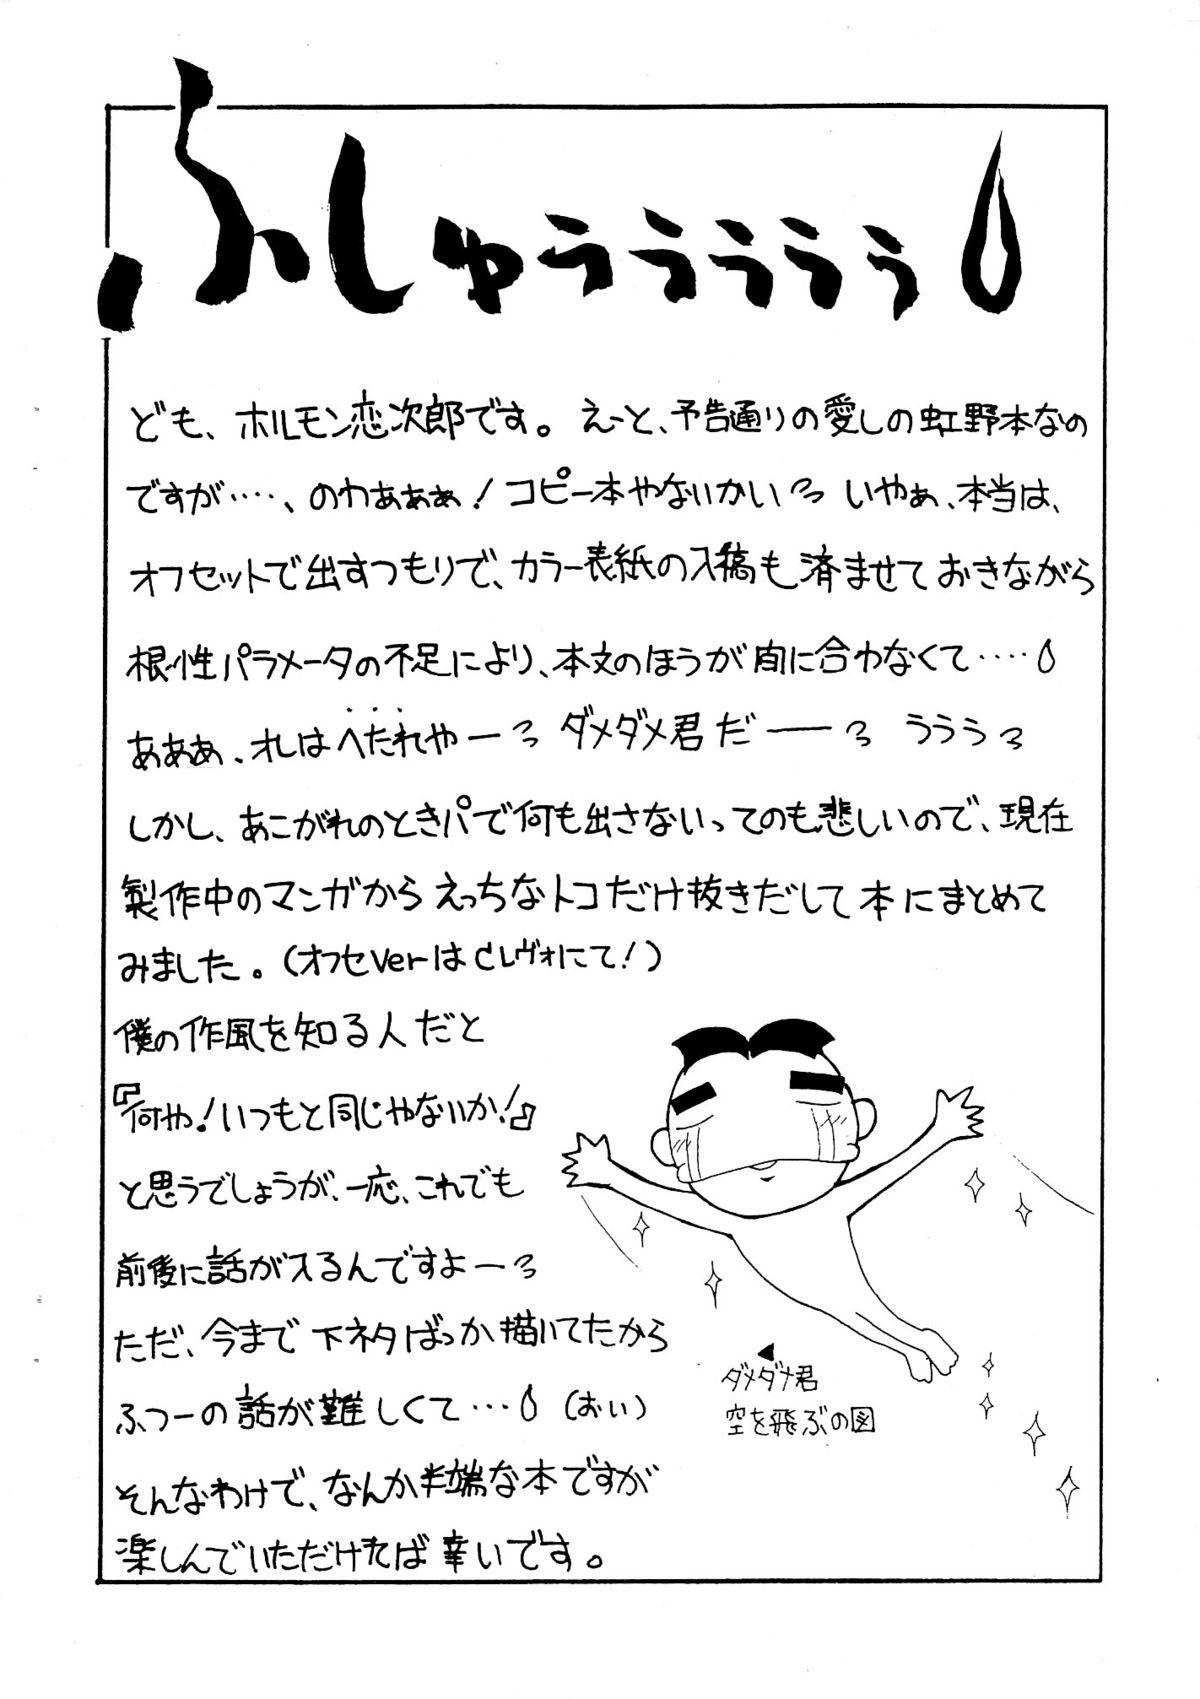 Nudity PLEASE EAT ME - Tokimeki memorial Camera - Page 2